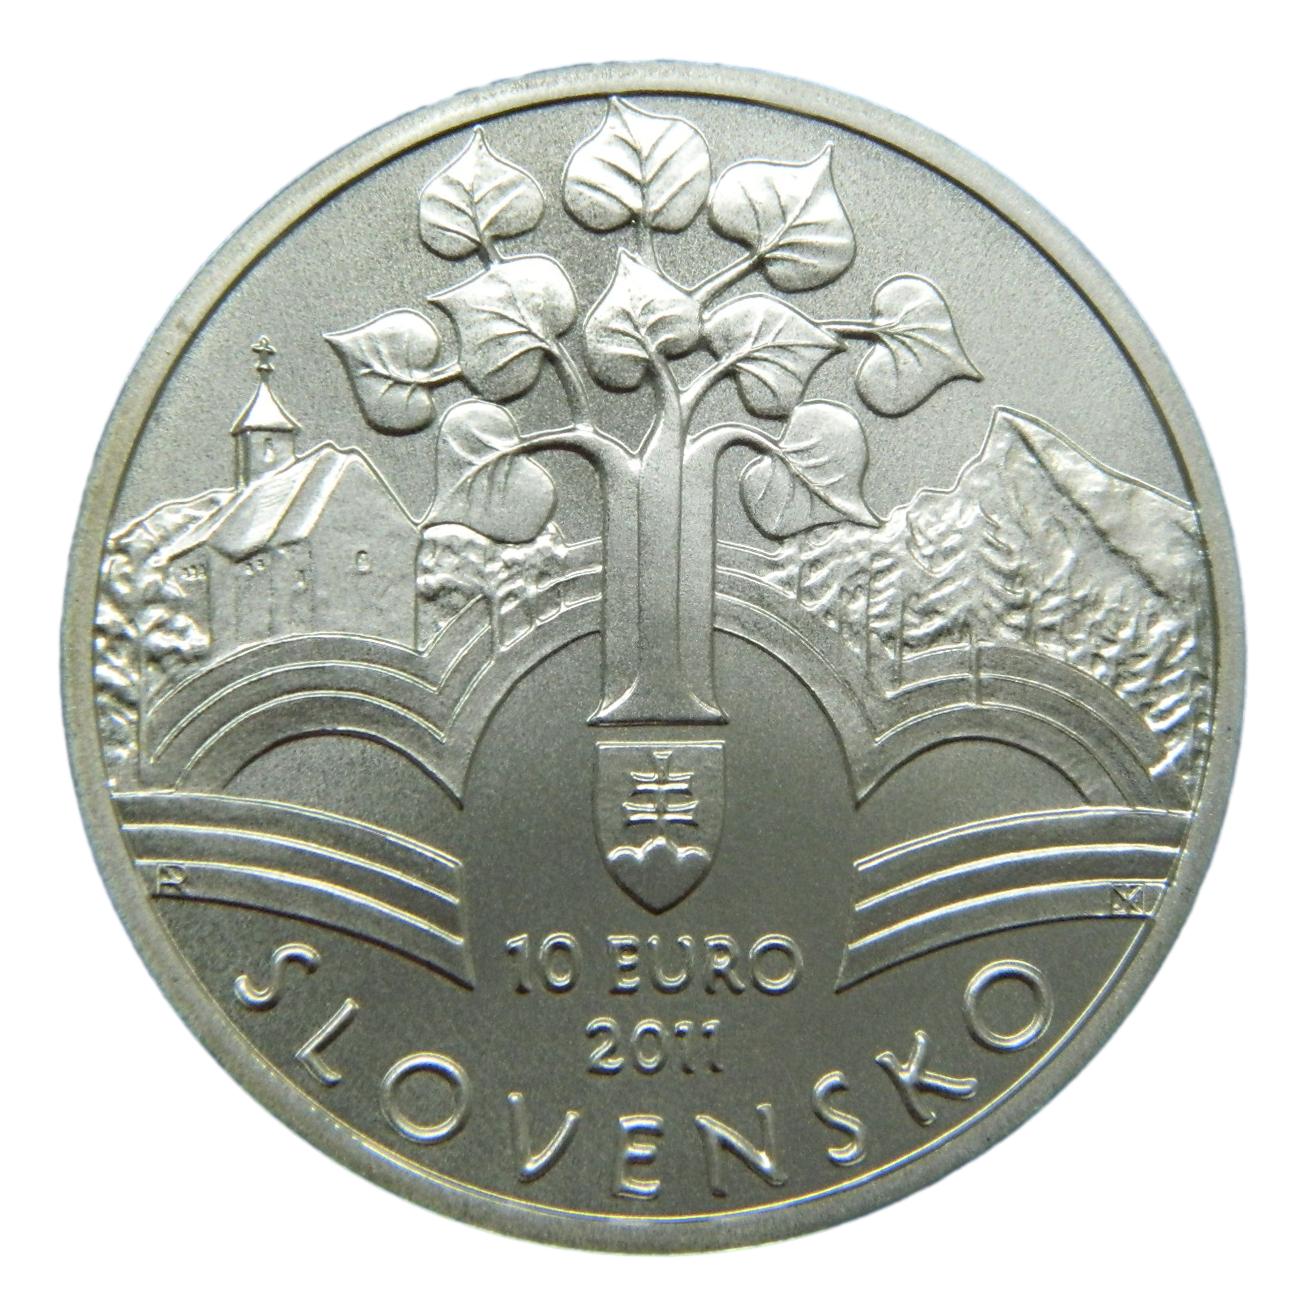 2011 - ESLOVAQUIA - 10 EURO - MEMORANDO DE LA NACION